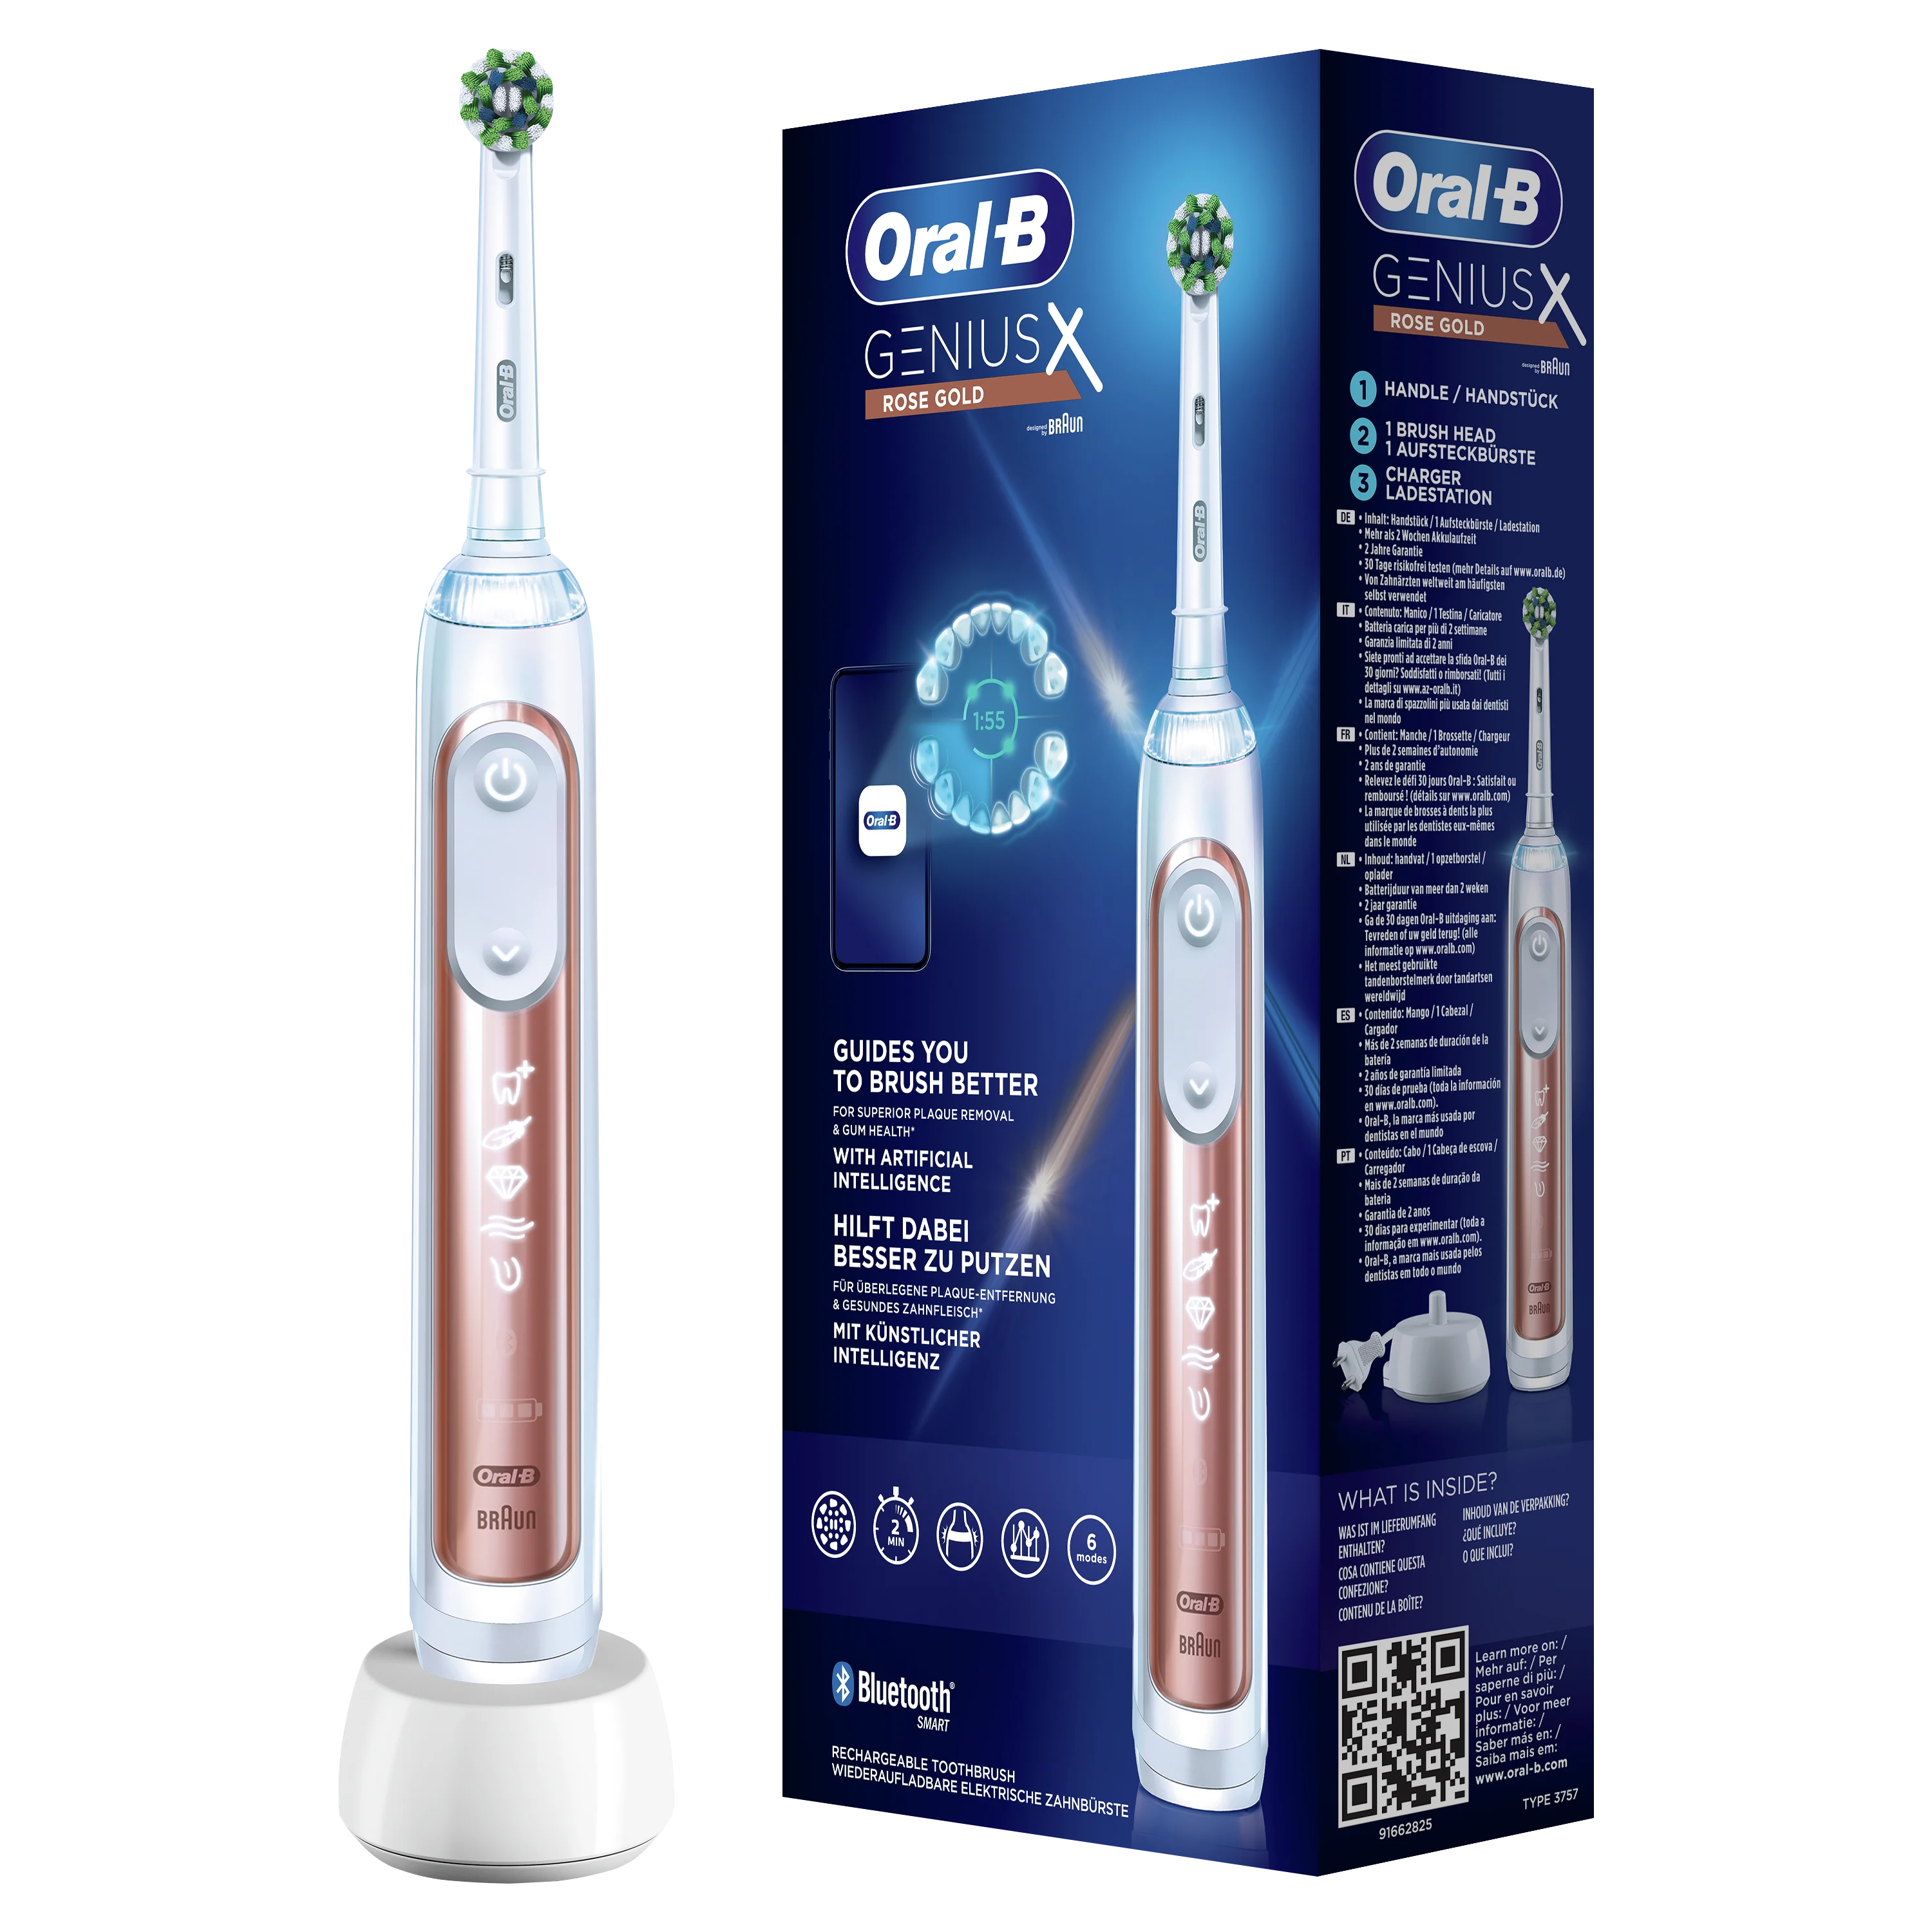 fotografie ik wil mooi Oral-B Speciale Editie Genius X Elektrische Tandenborstel | Oral-B